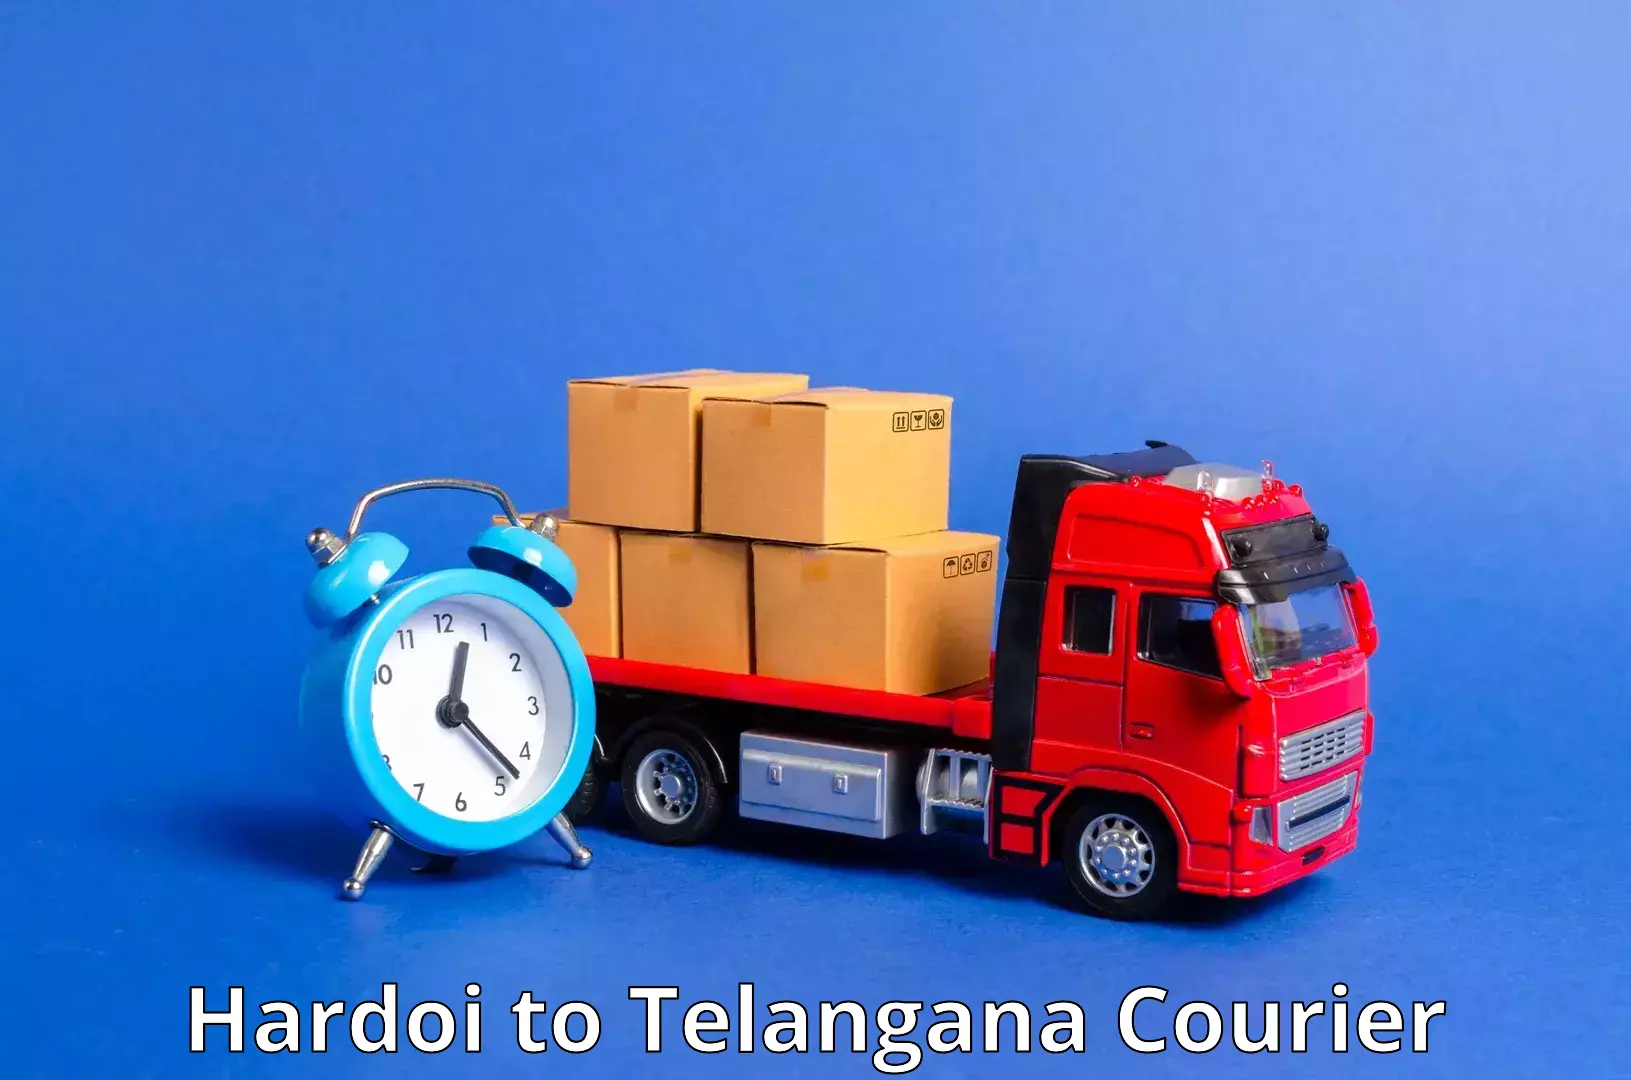 On-call courier service Hardoi to Telangana